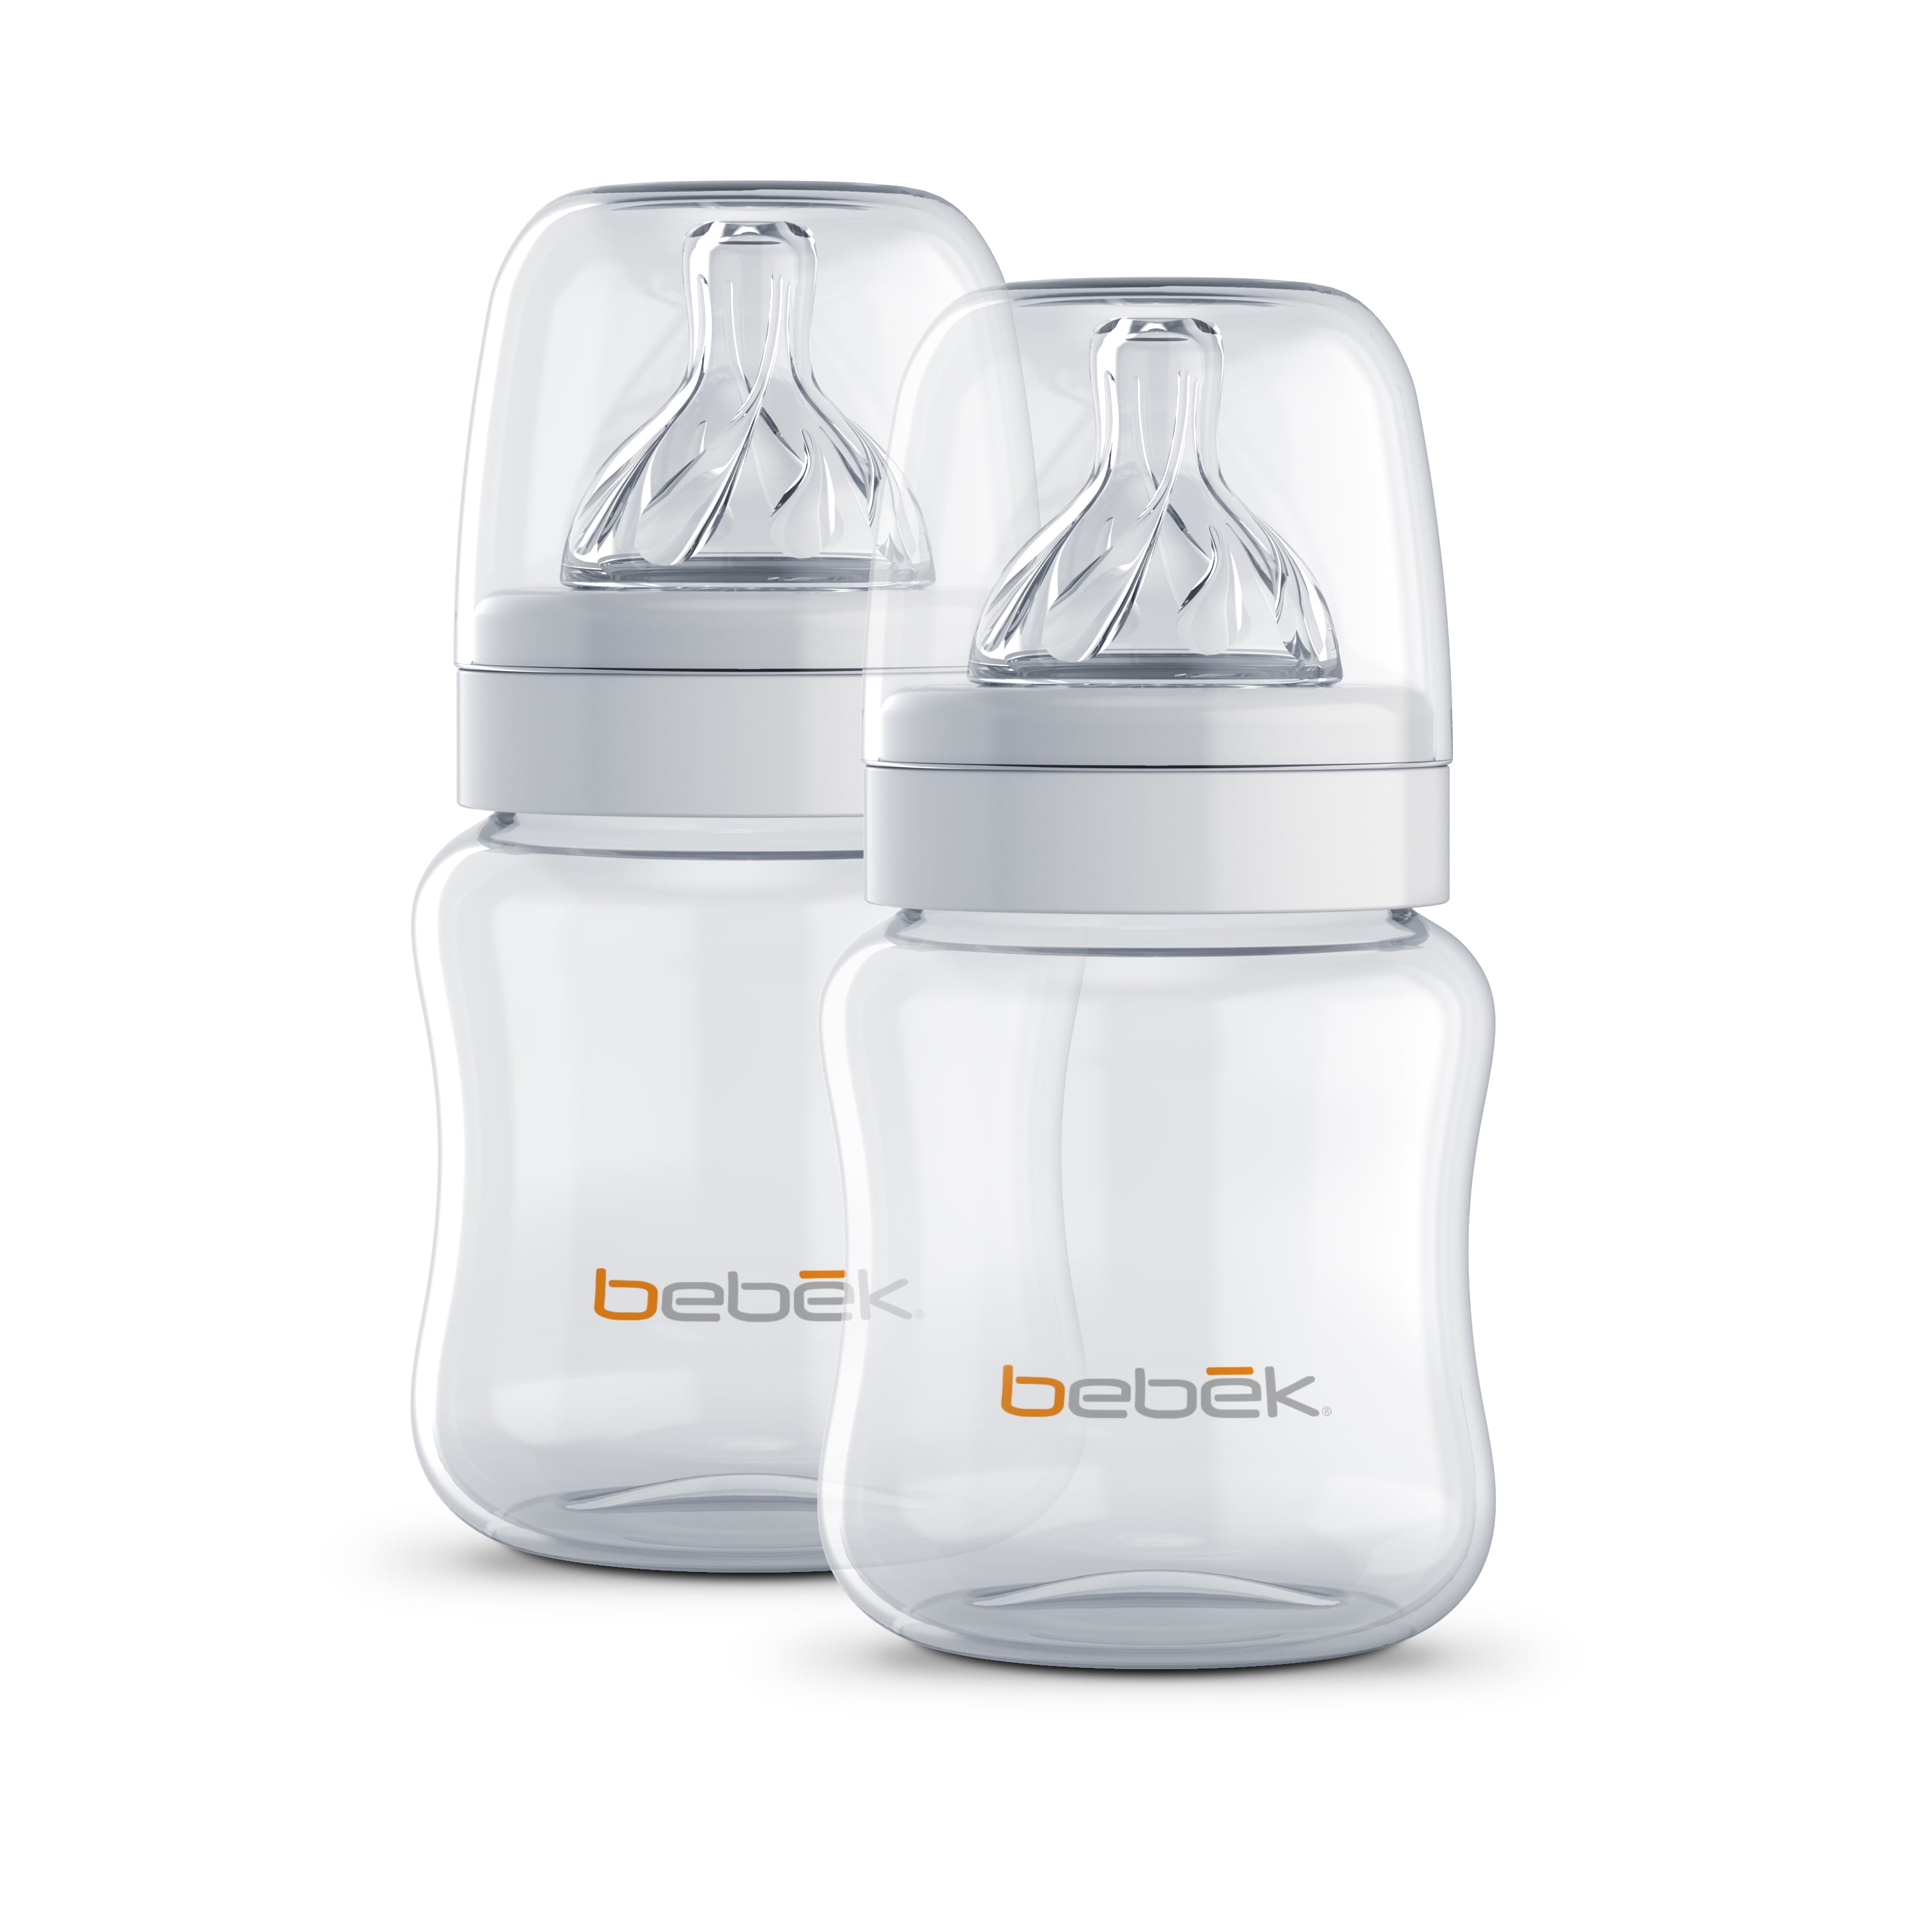 FDBTL Baby Bottle Glass Natural Anti-Colic Bottles Closer to Breastfeeding  for Newborn Babies Infant 0M+ 6Oz